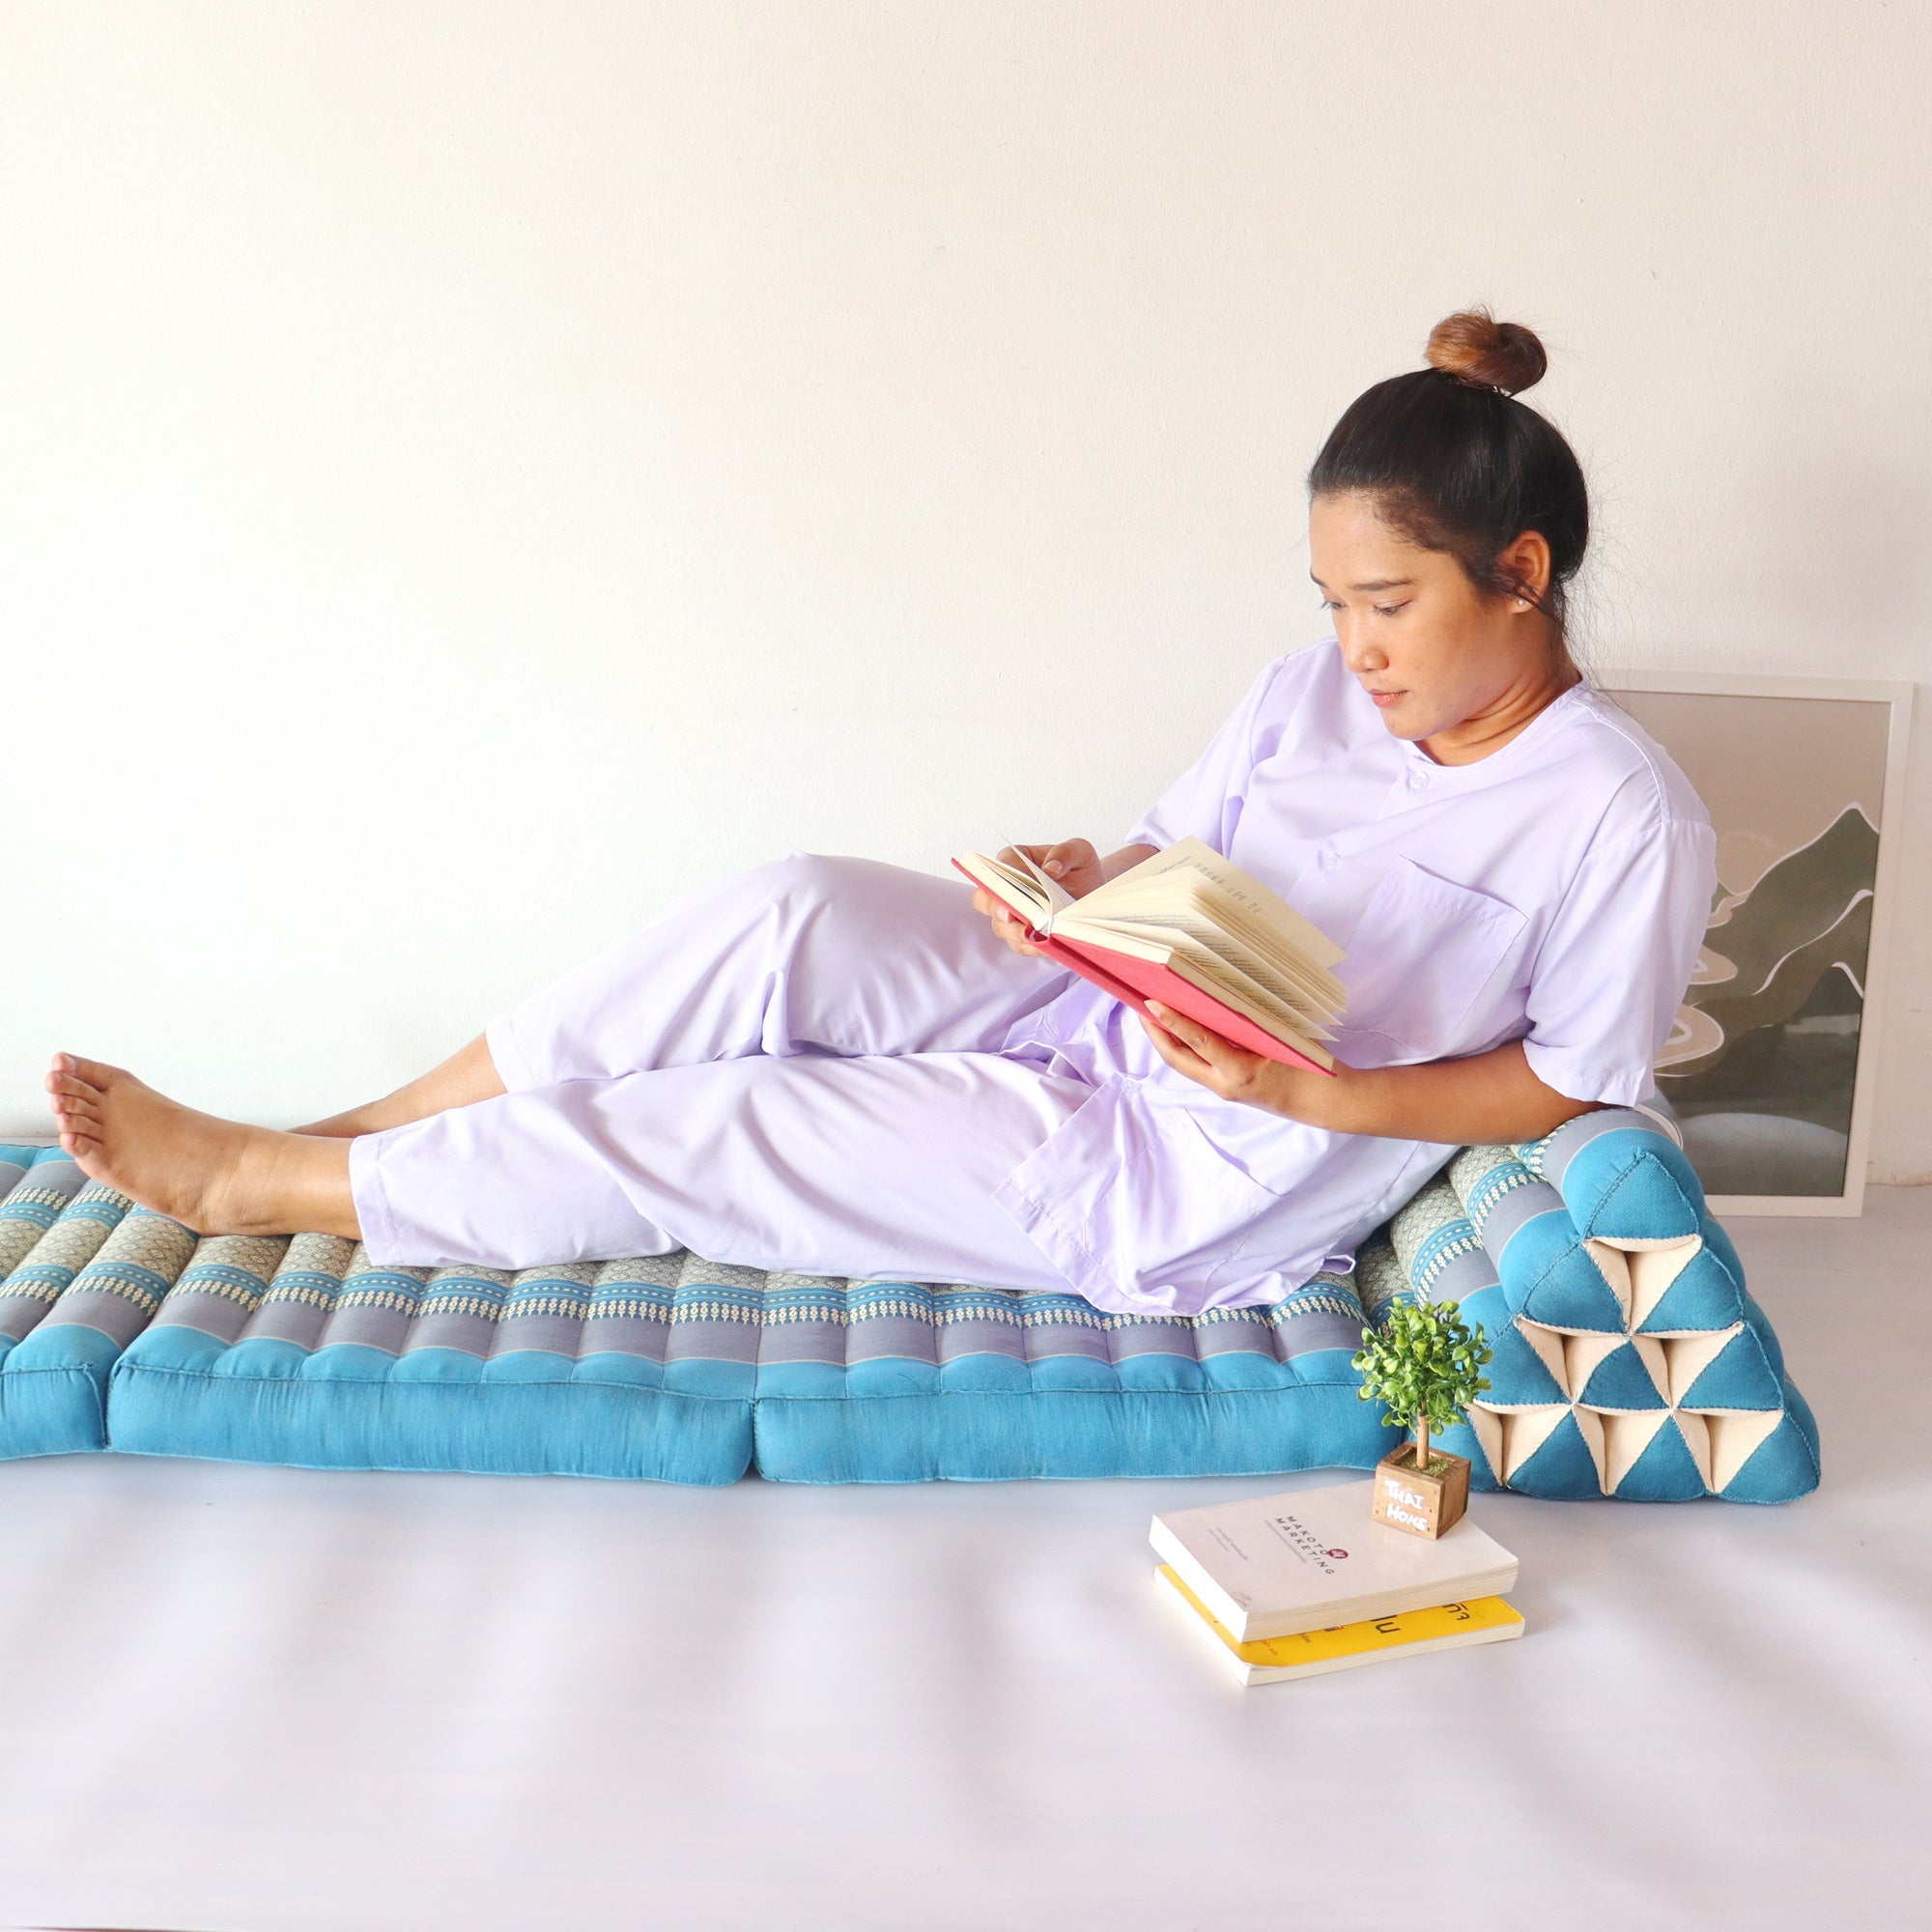 WI MON RUT - Thai Triangle Cushion (3 Fold - Light Blue)